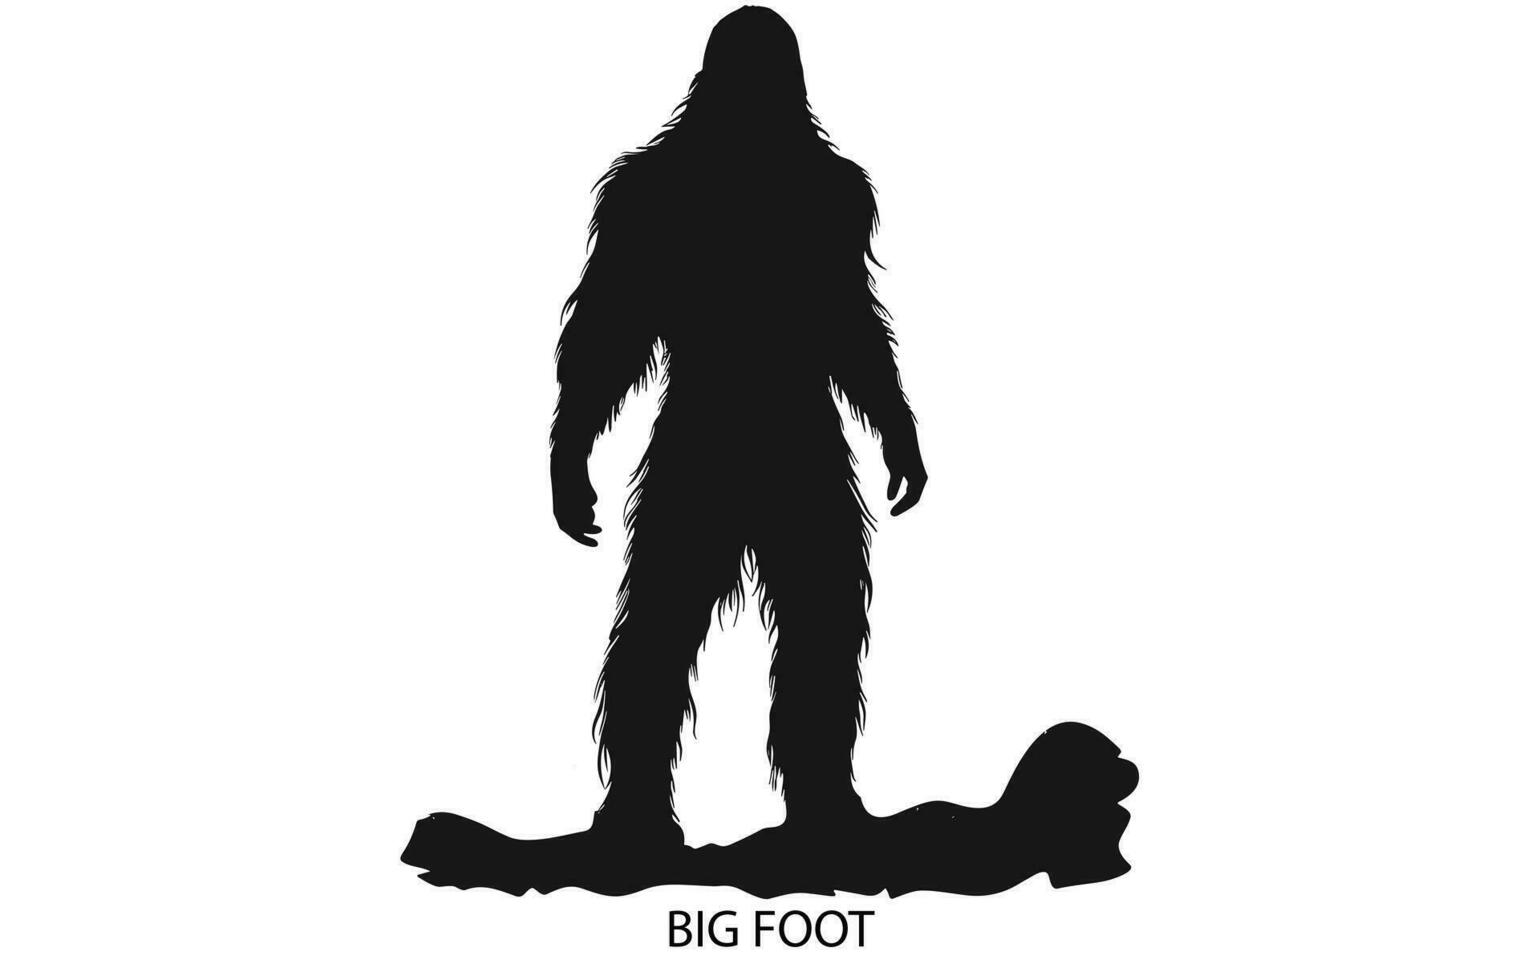 grote voet silhouet vector illustratie.big voet yeti logo icoon ontwerp